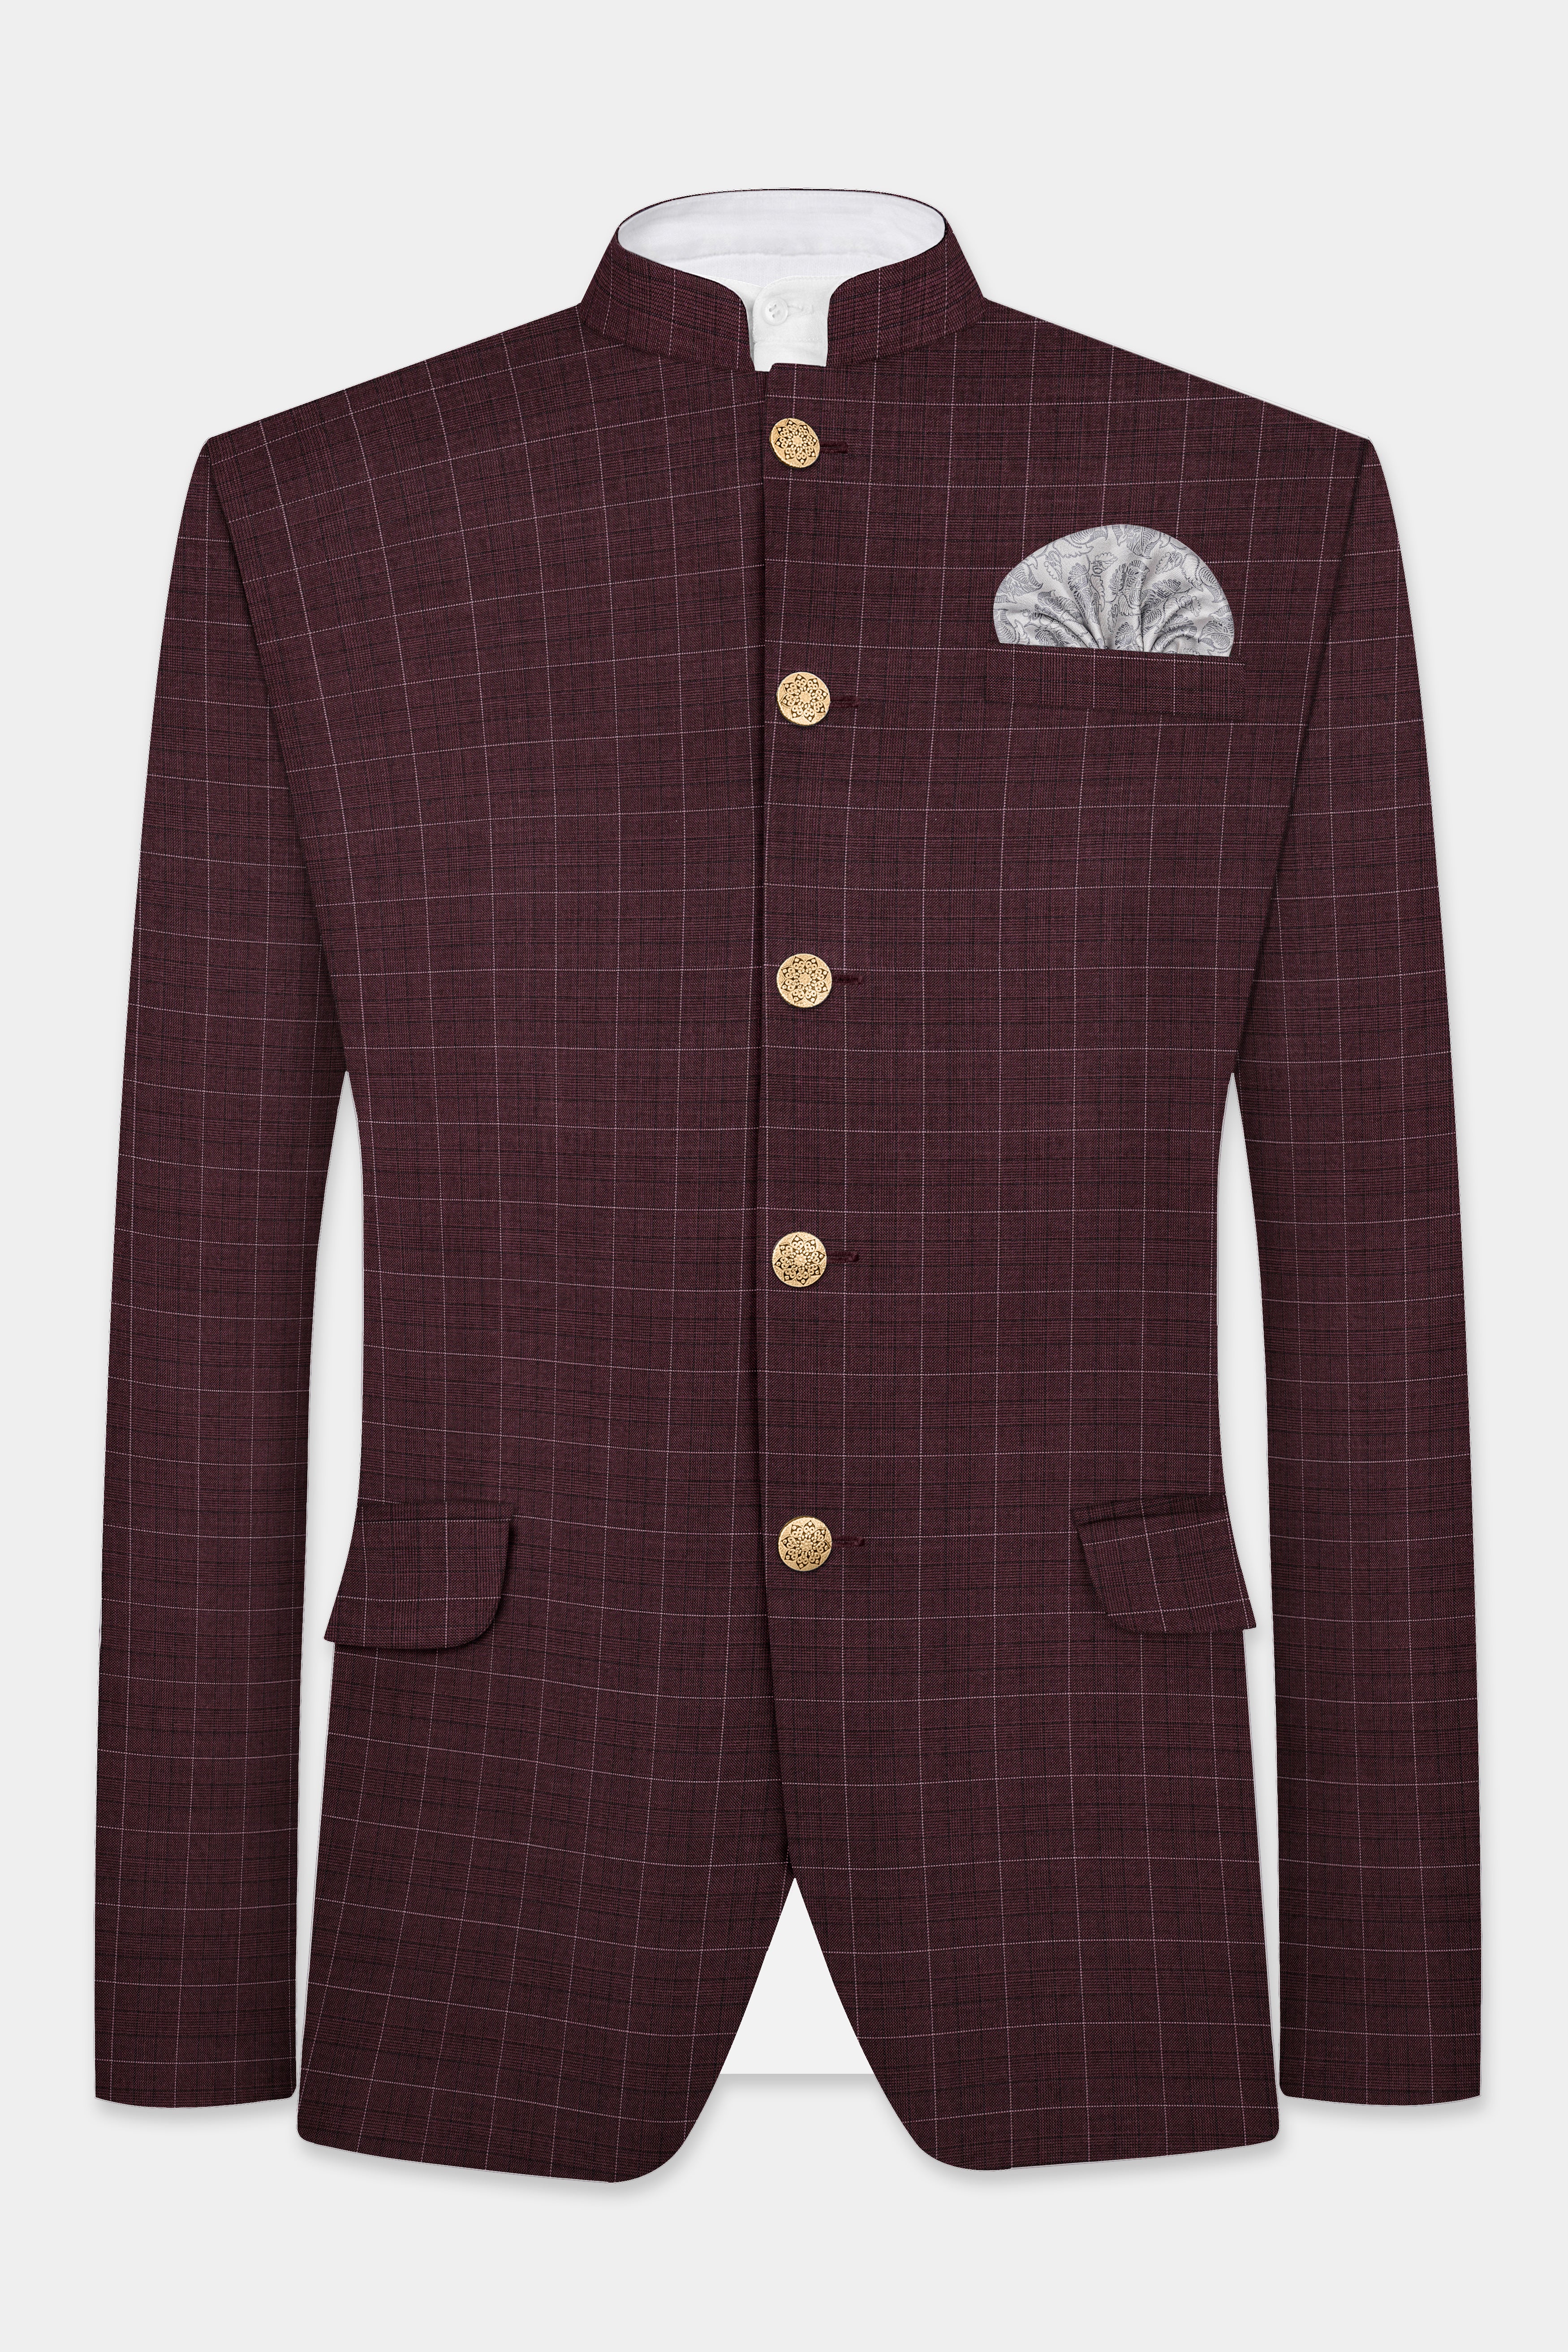 Iroko maroon Windowpane Wool Rich Bandhgala Suit